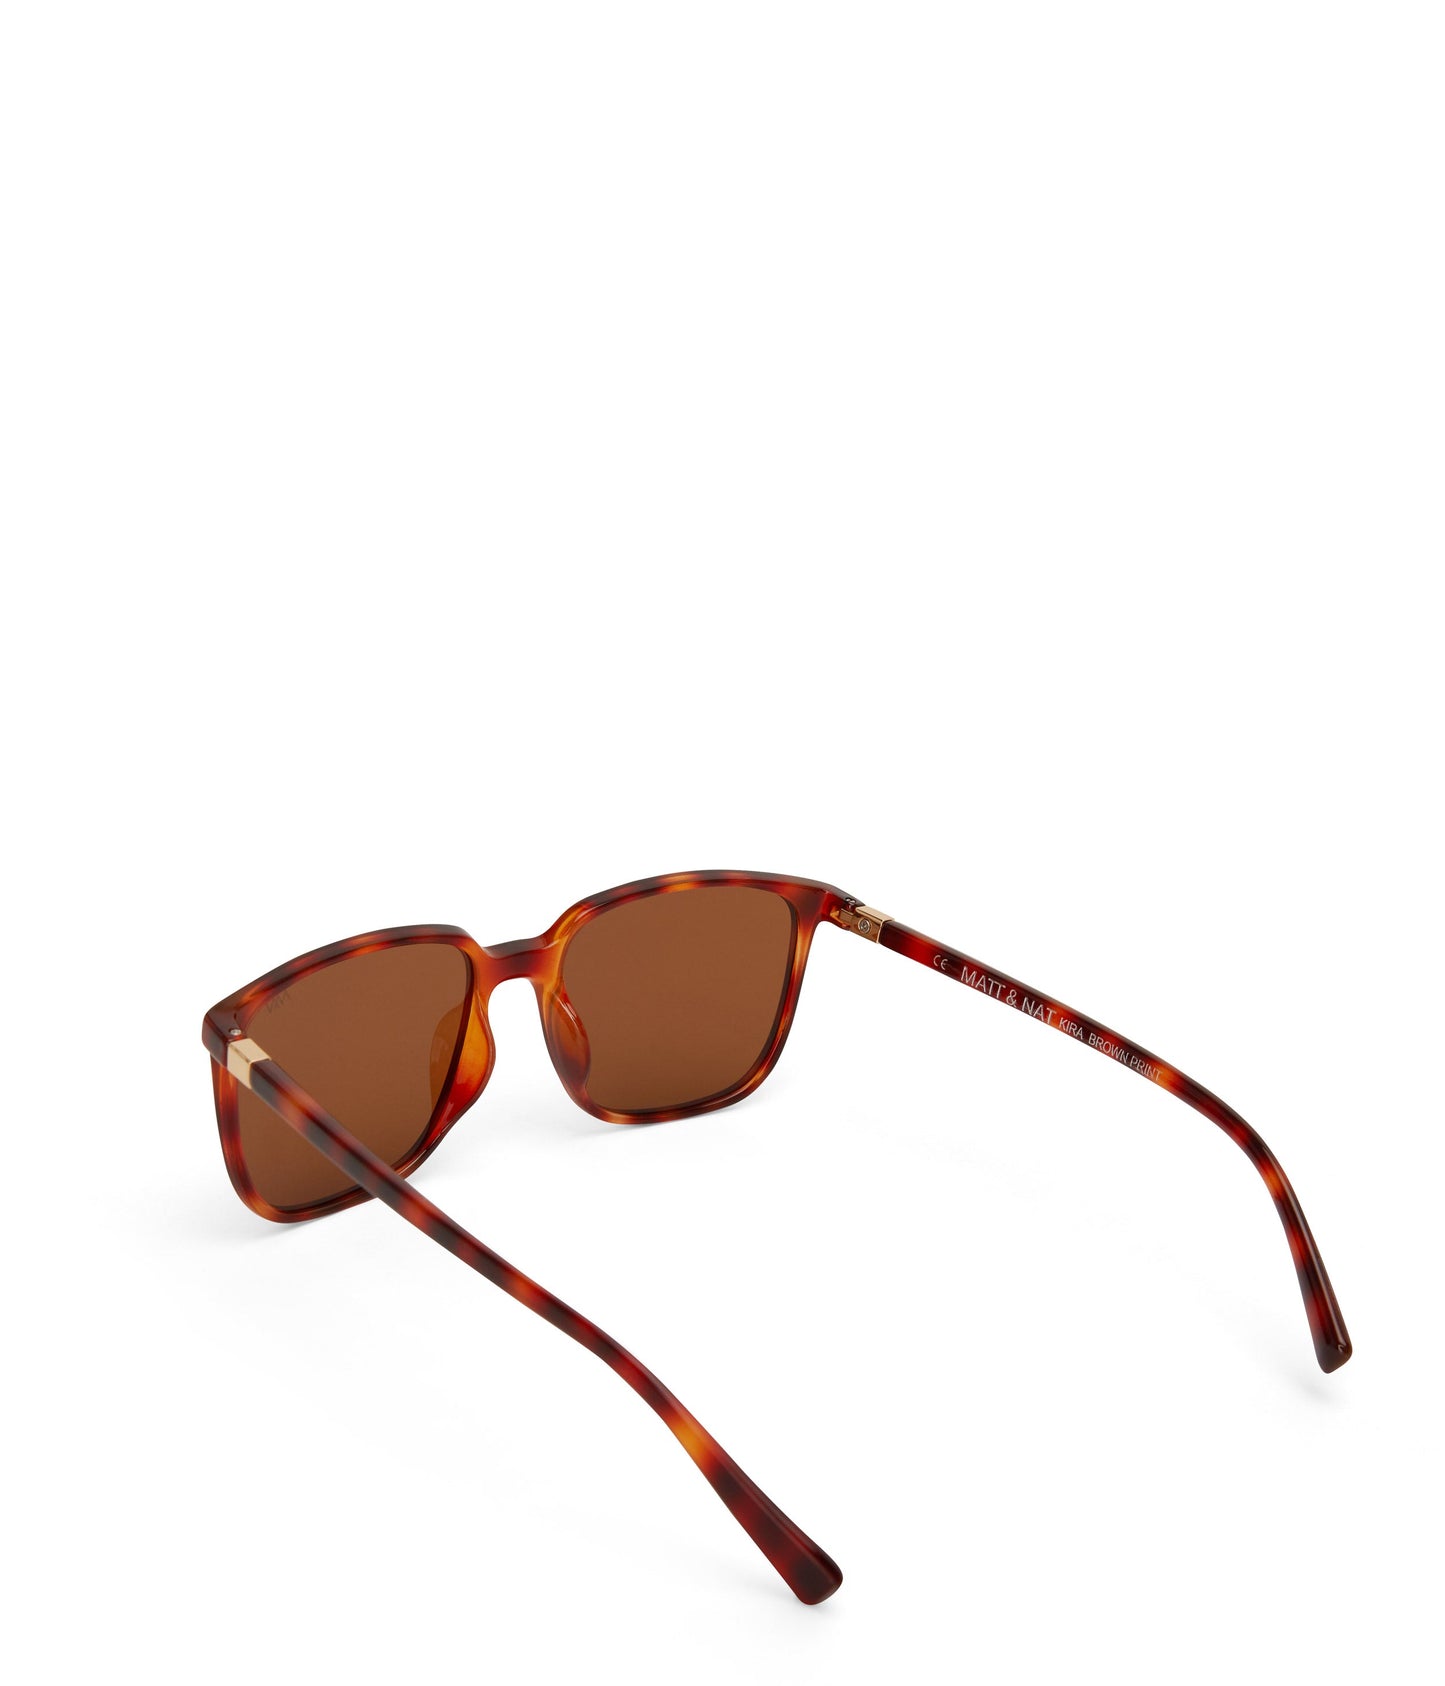 KIRA Square Sunglasses | Color: Brown - variant::brown